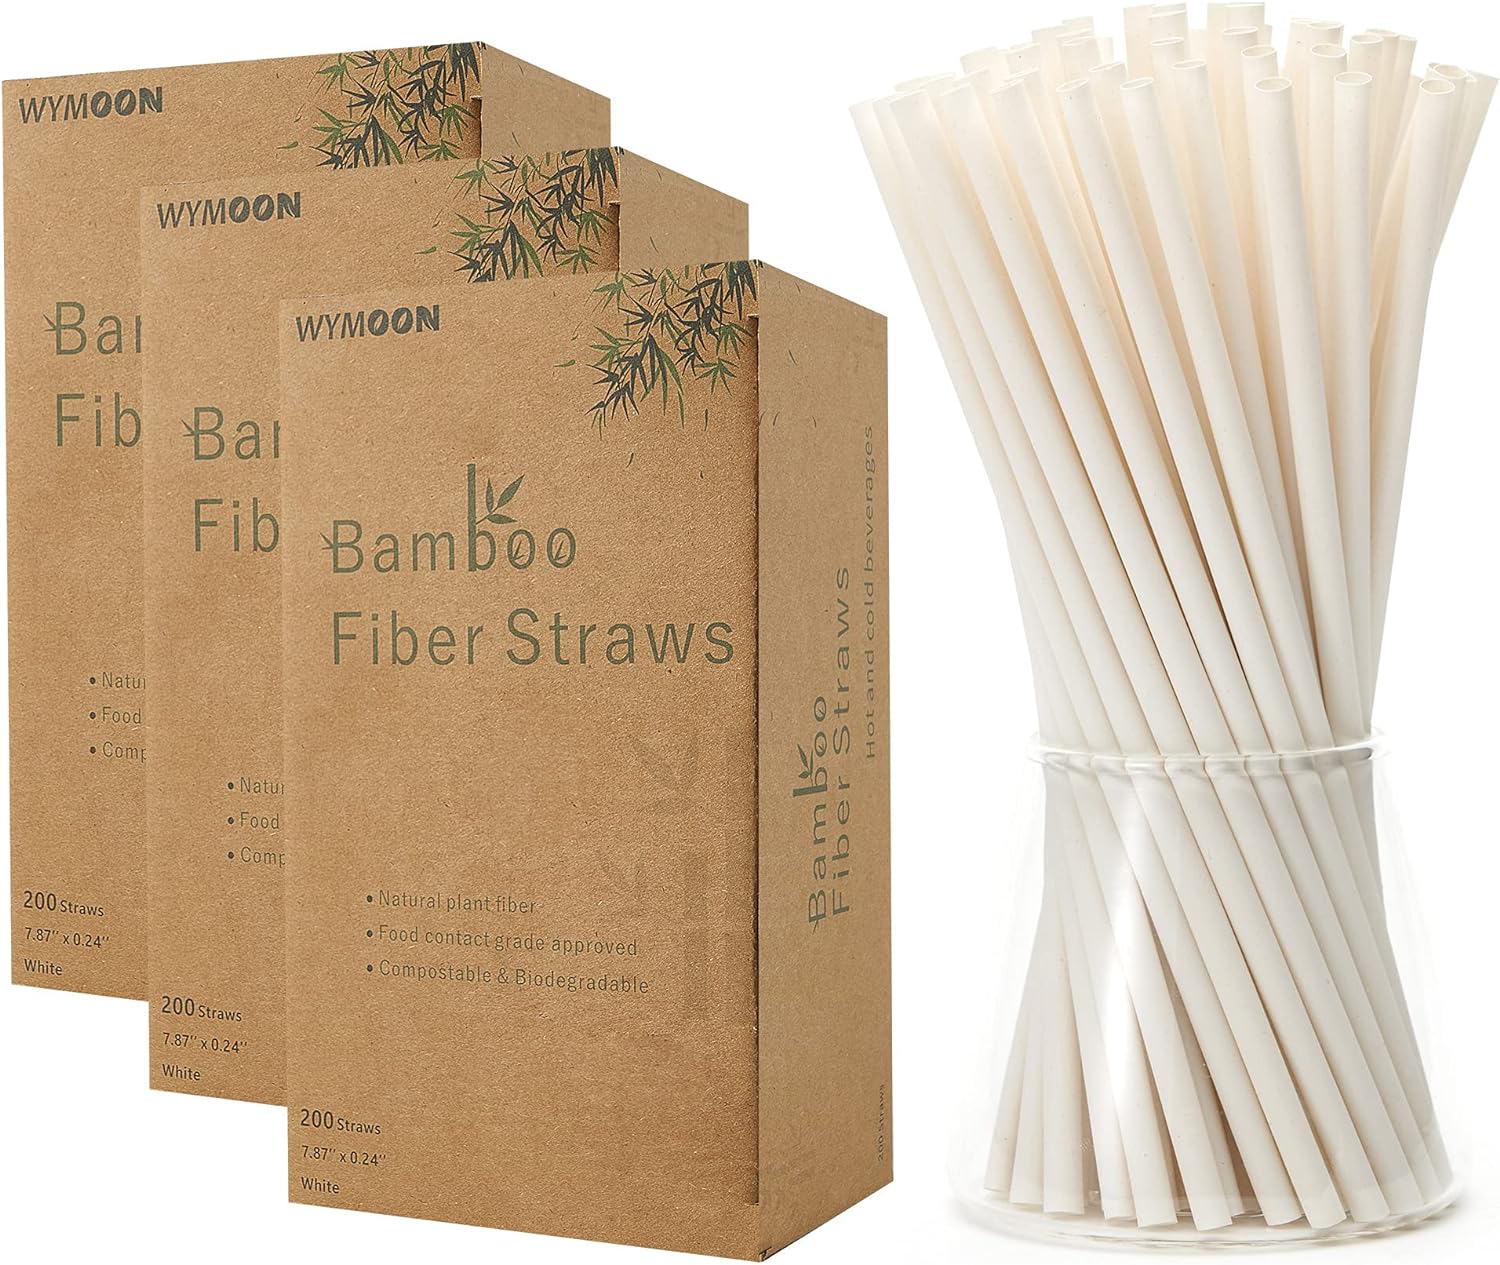 Biodegradable Bamboo Fiber Straws Review